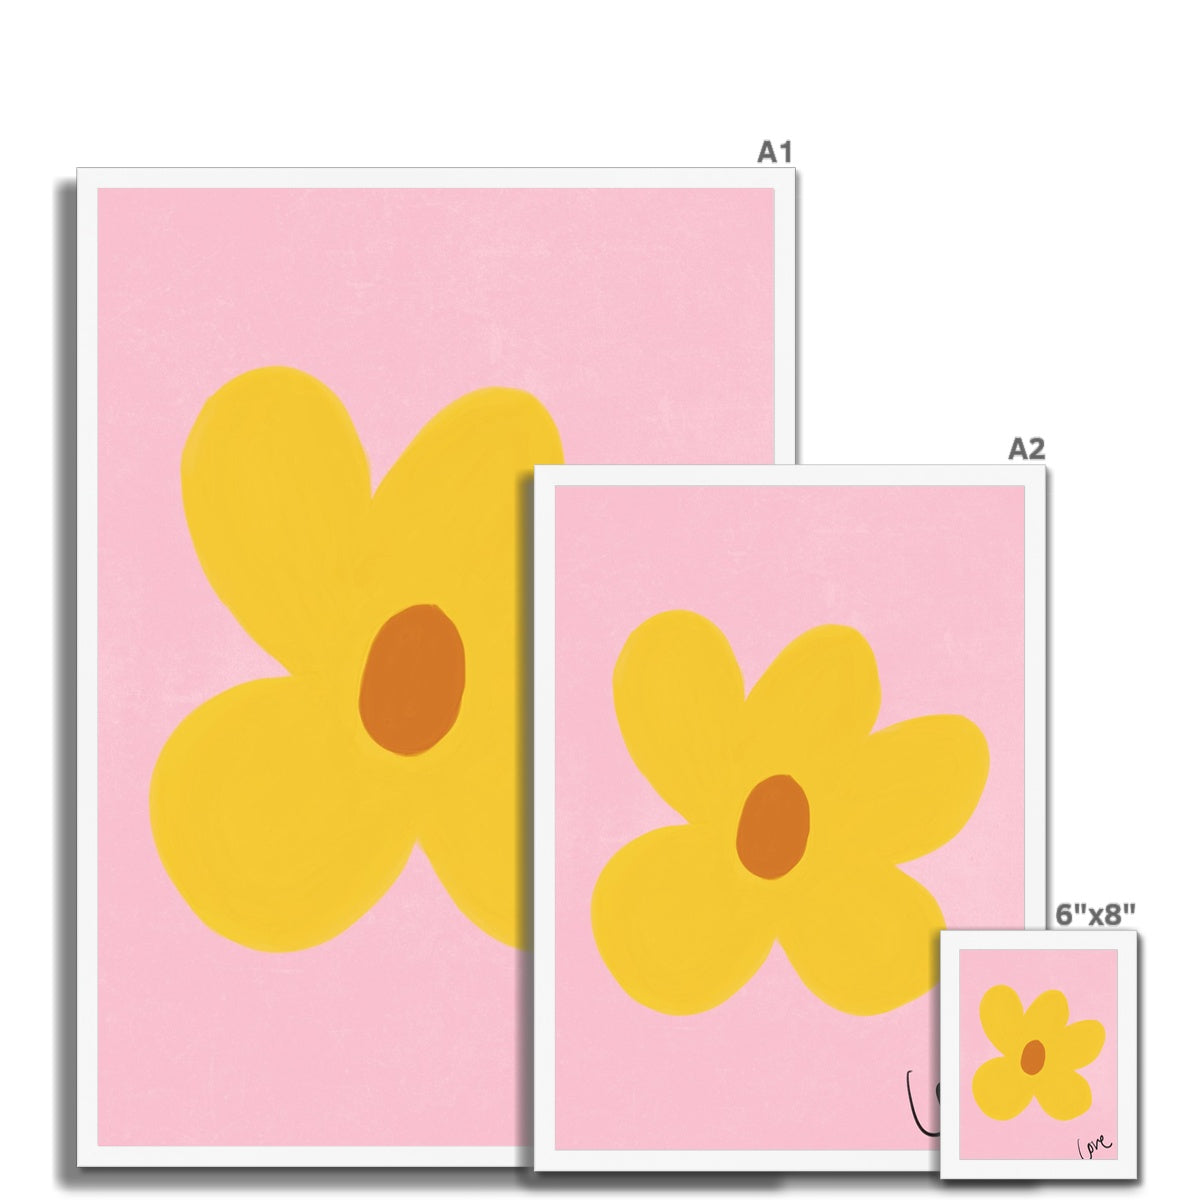 Love Flower Print - Pink, Yellow, Brown Framed Print